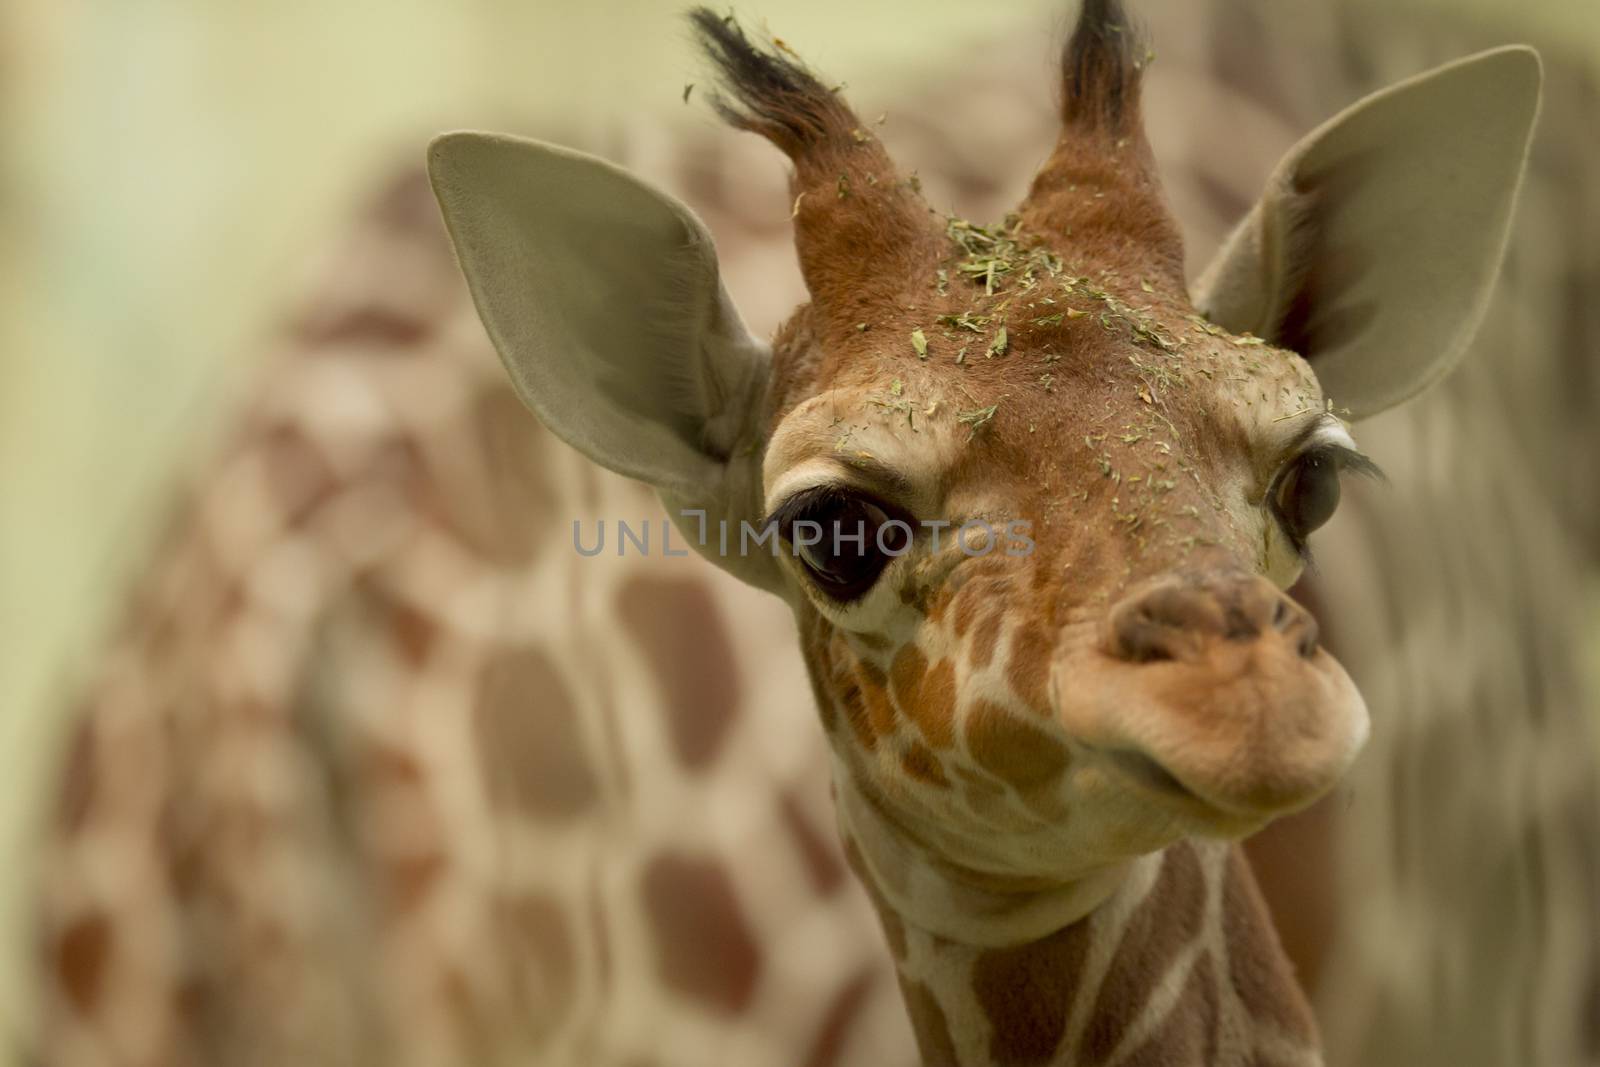 Giraffe calf, baby giraffe portrait by ozkanzozmen